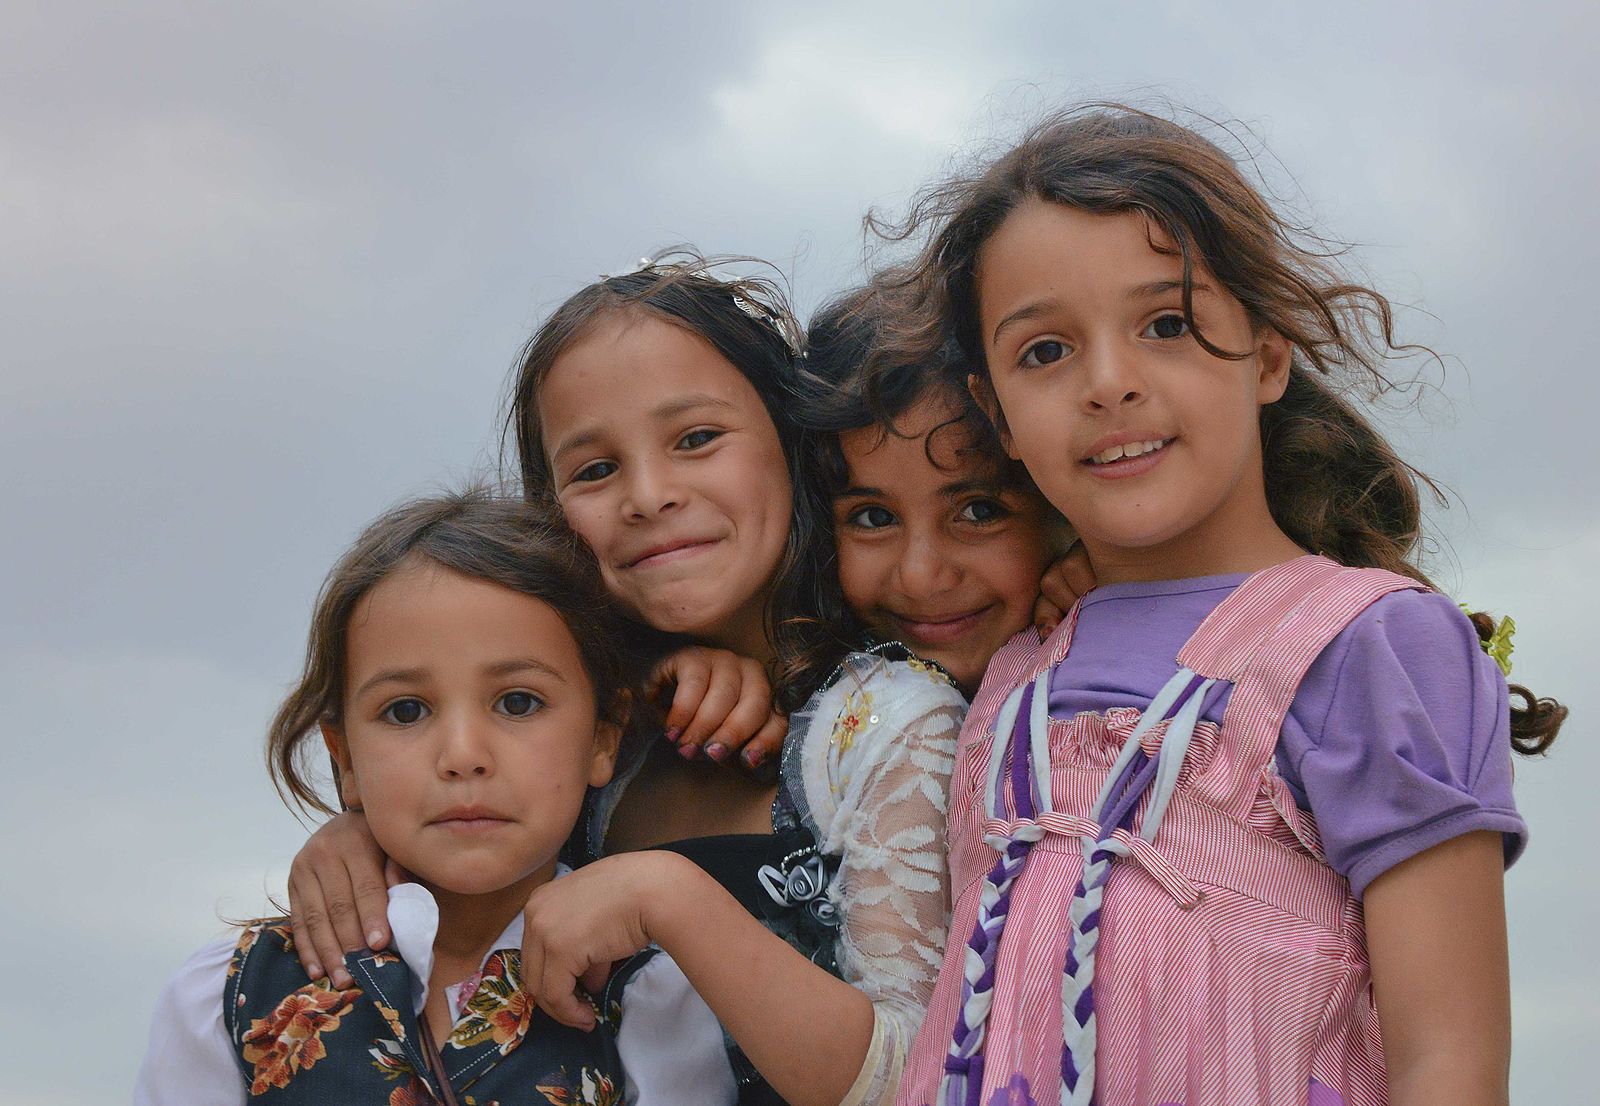 https://commons.wikimedia.org/wiki/File:Sana%27a_Girls,_Yemen_(11703026235).jpg